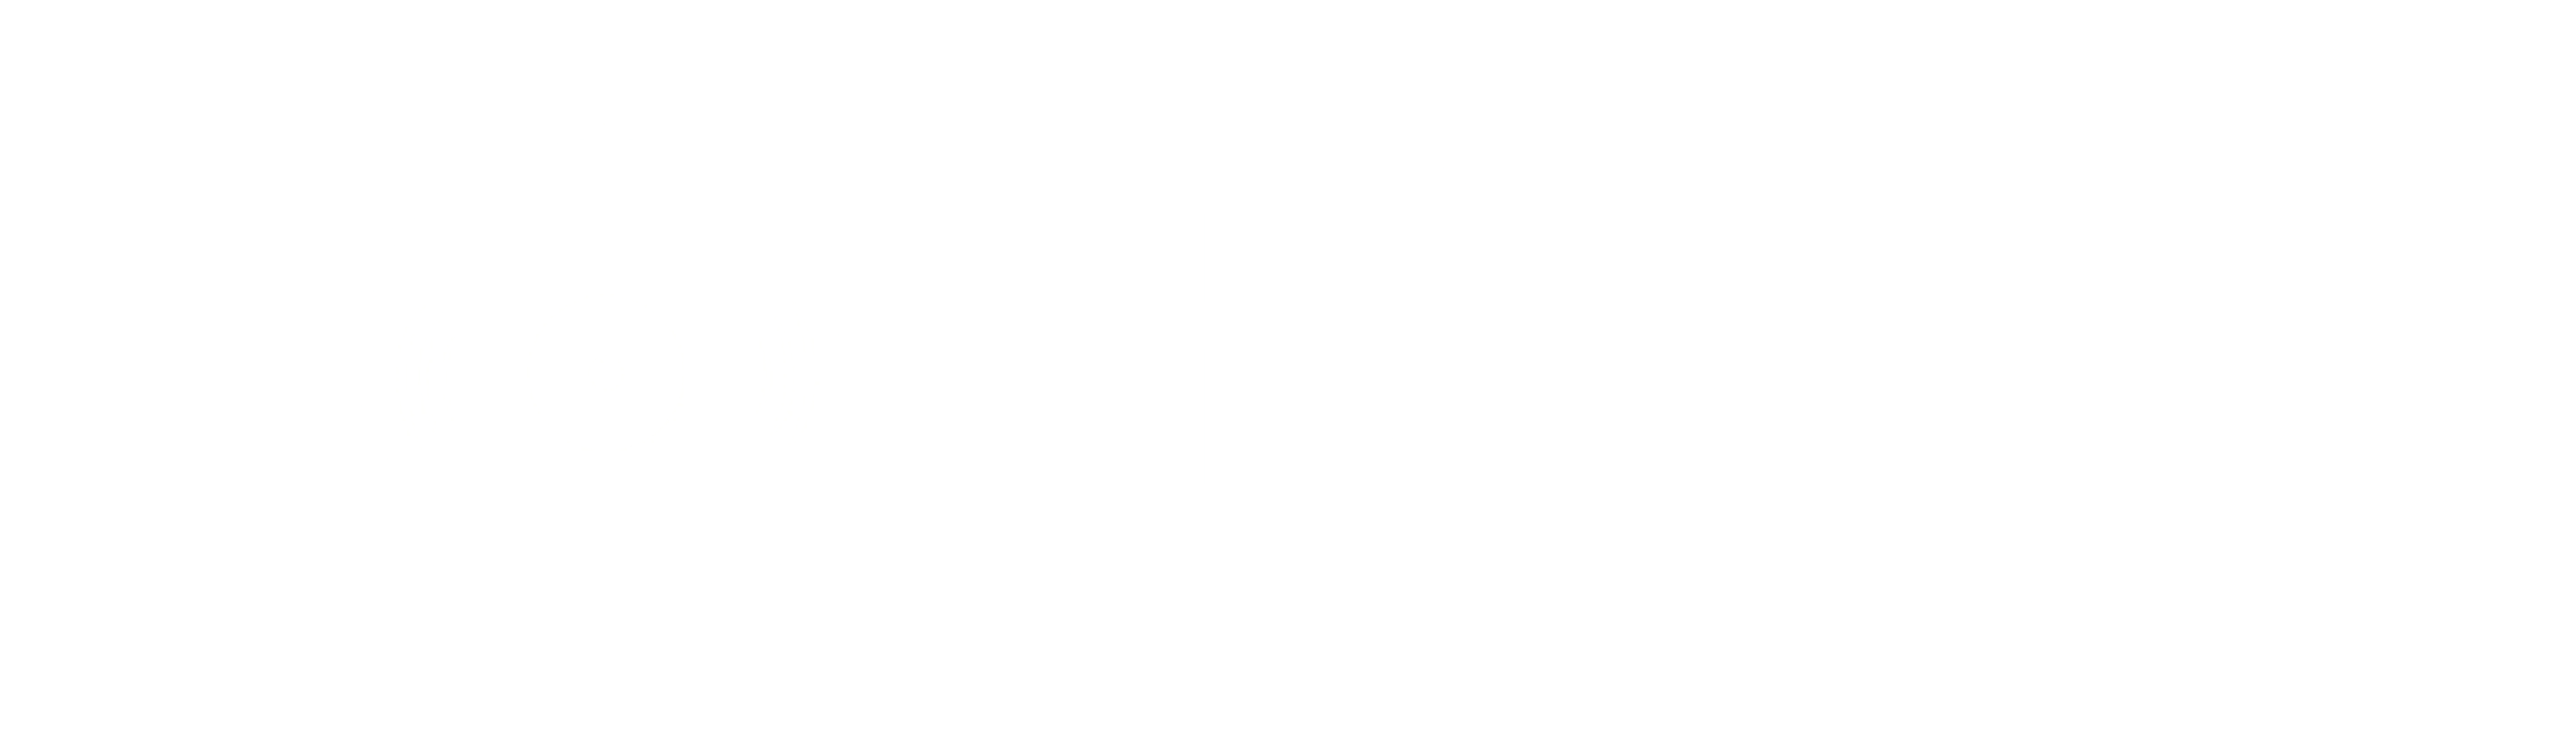 Prod203